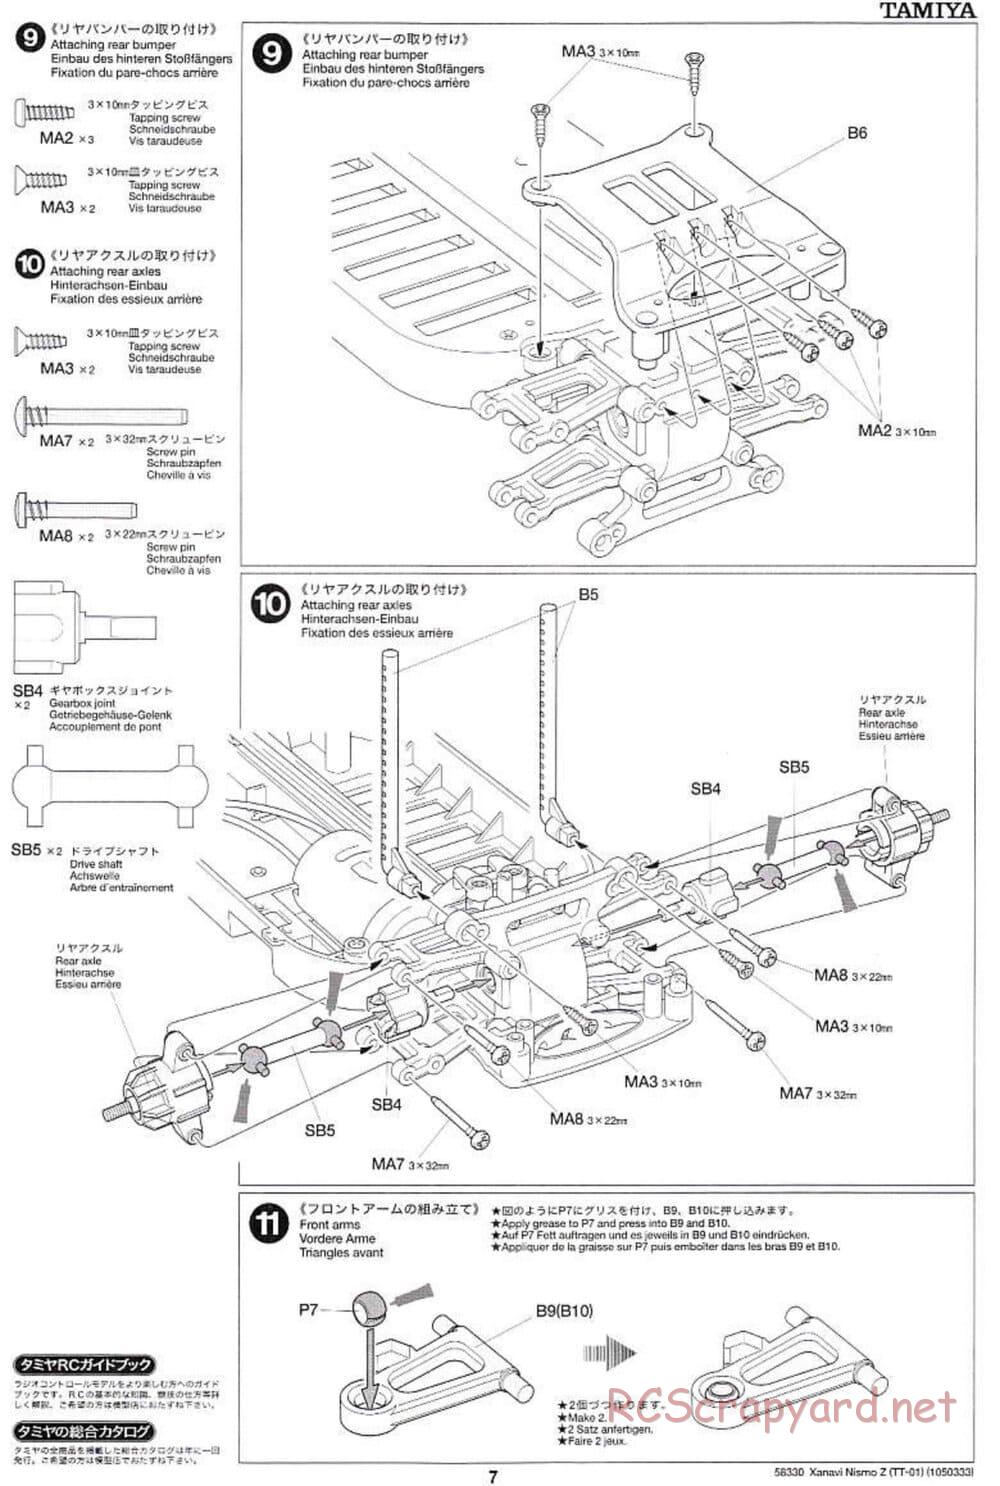 Tamiya - Xanavi Nismo Z - TT-01 Chassis - Manual - Page 7